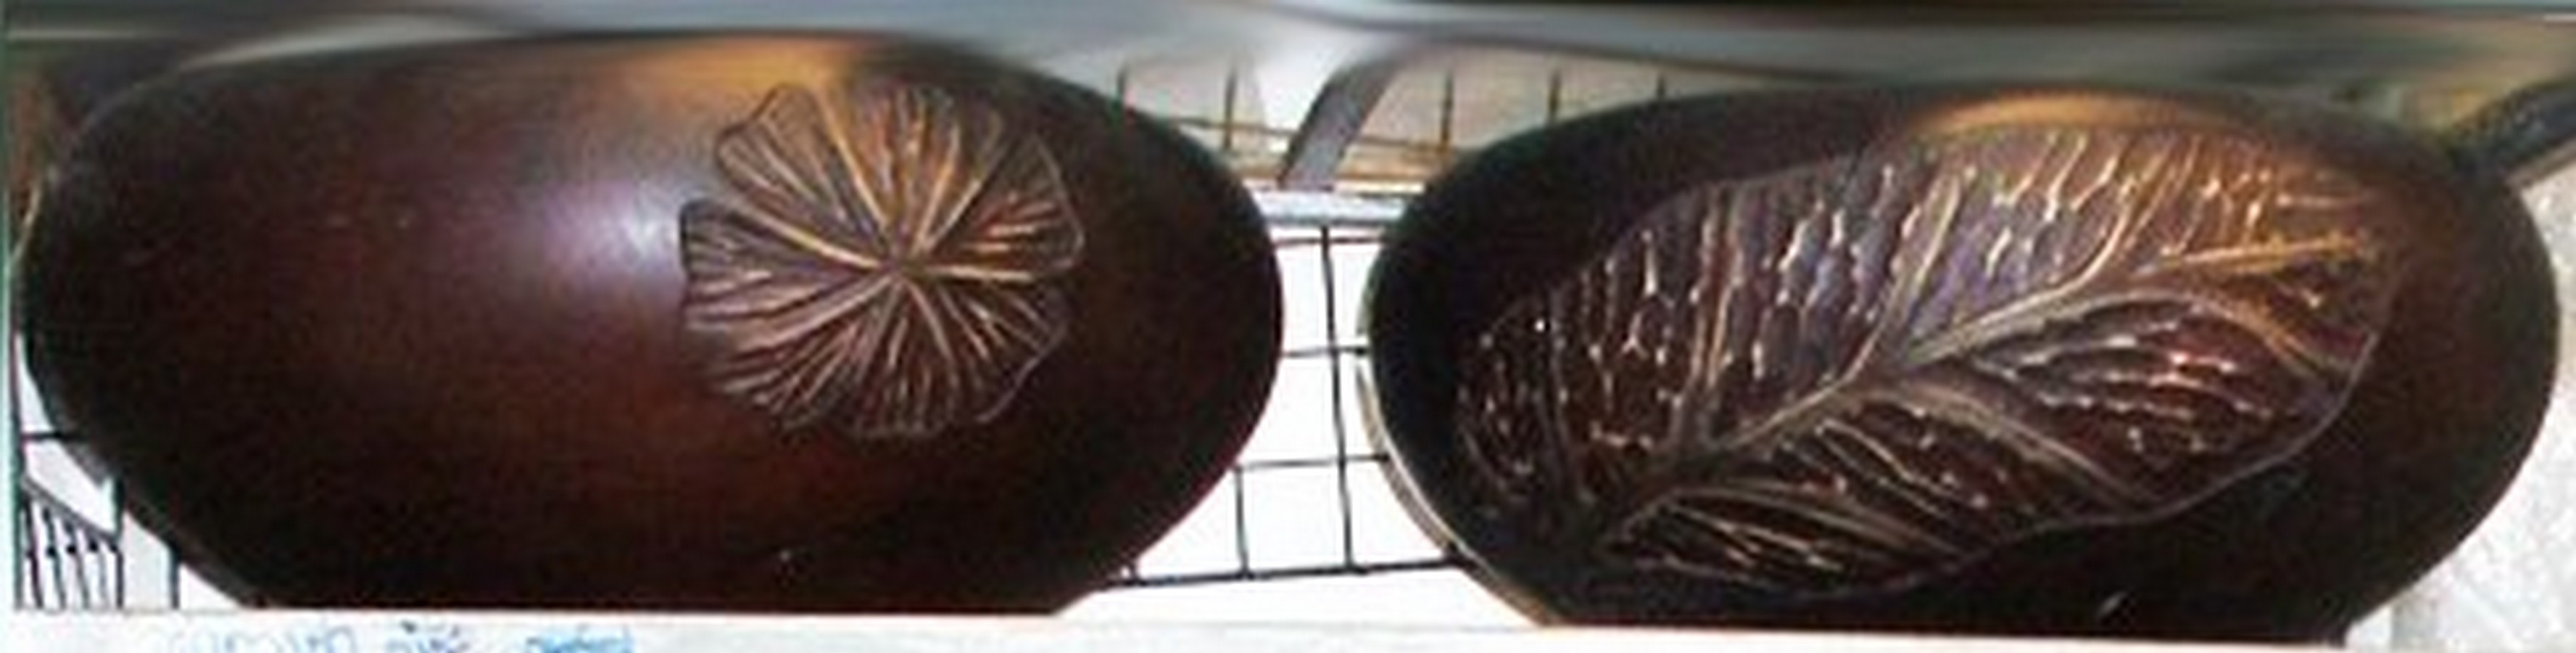 Handmade Bowl decoration in mango wood